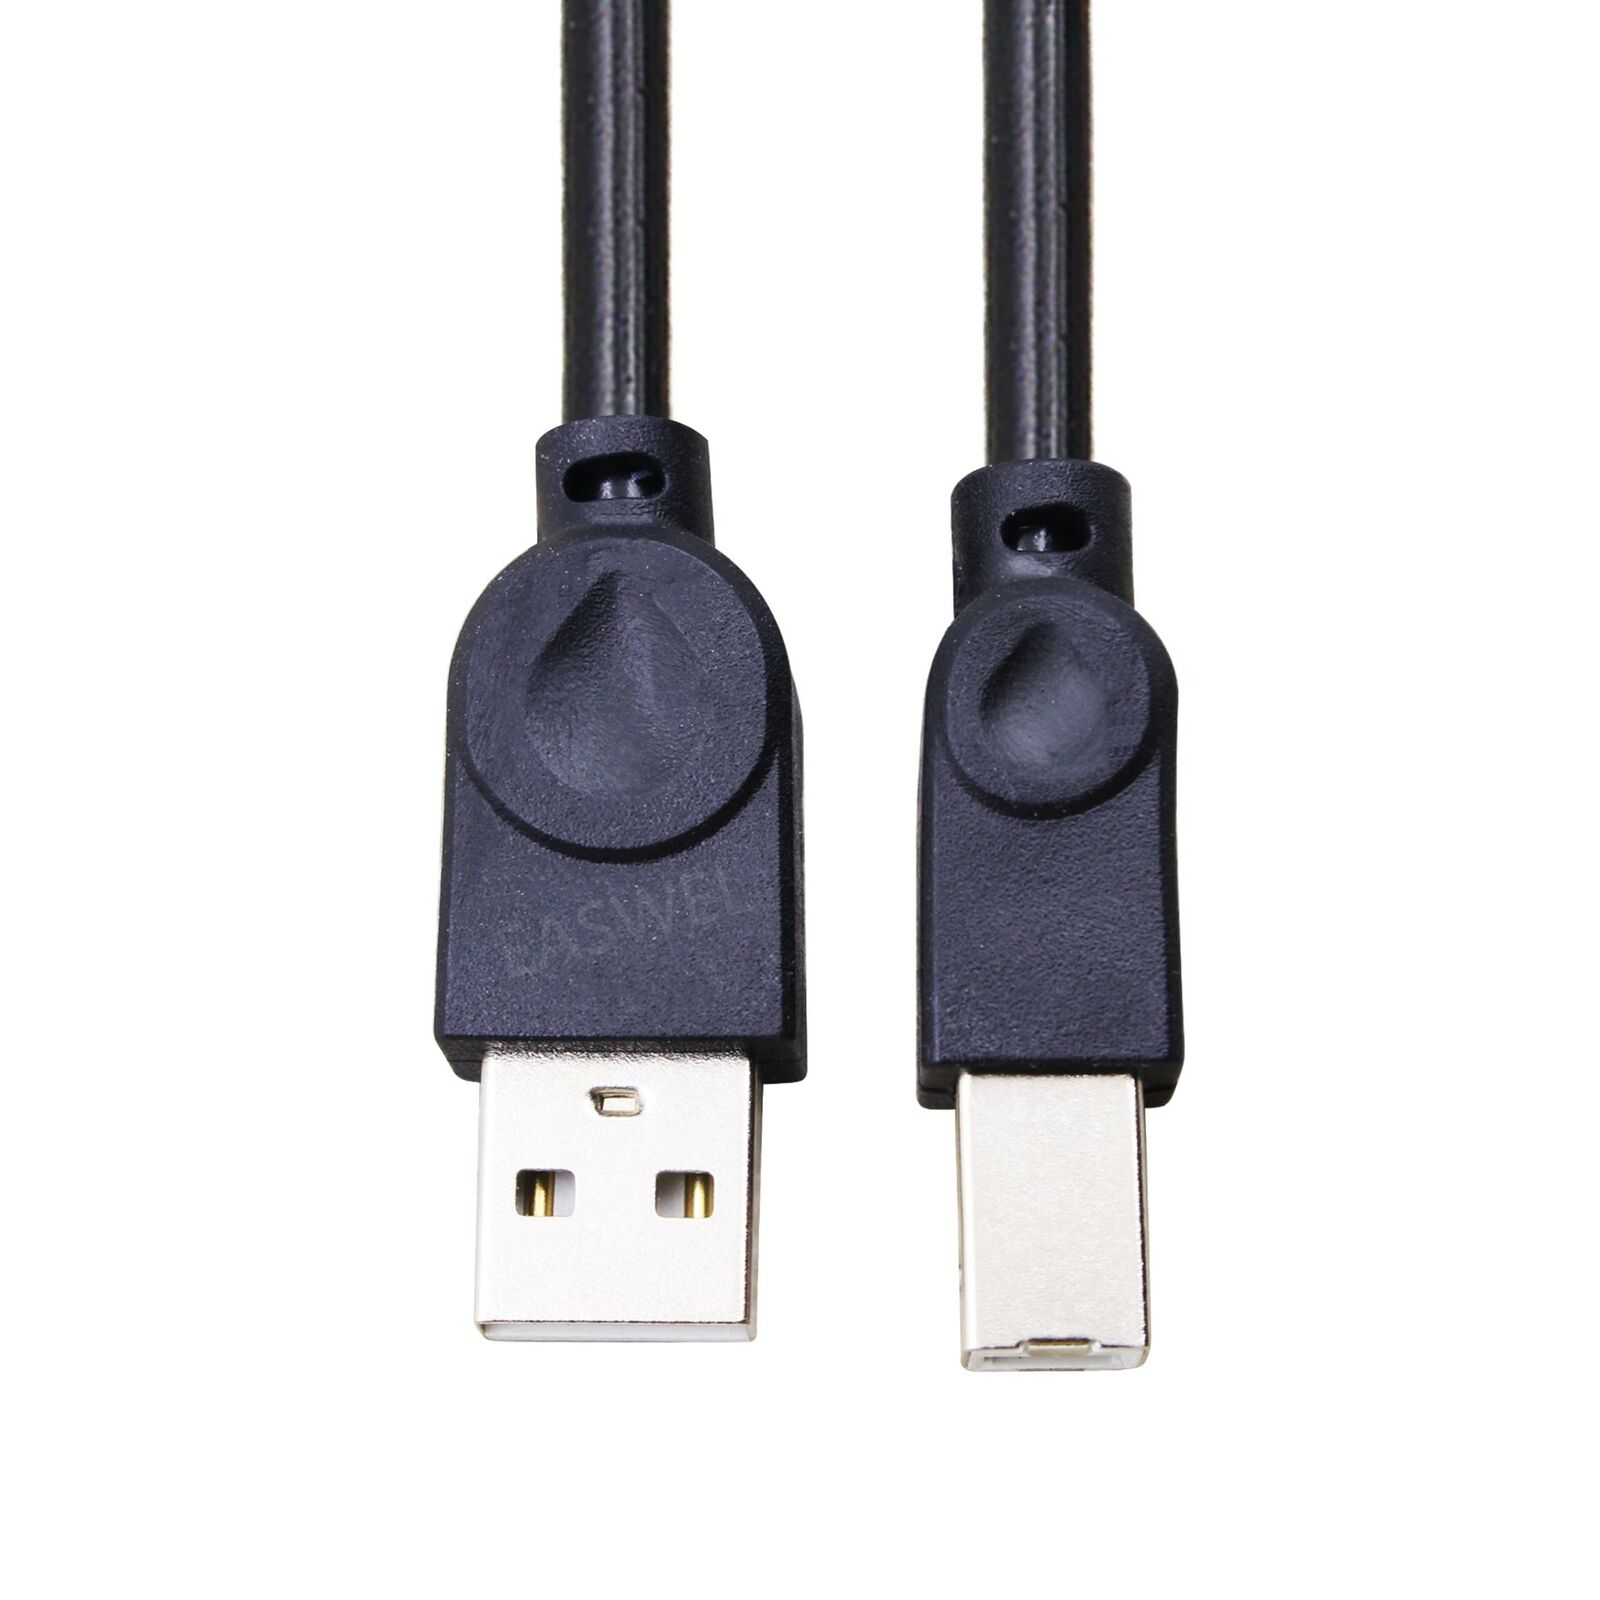 BLK USB Data Cable Cord For Panasonic KX-TA824 Advanced Telephone Hybrid System